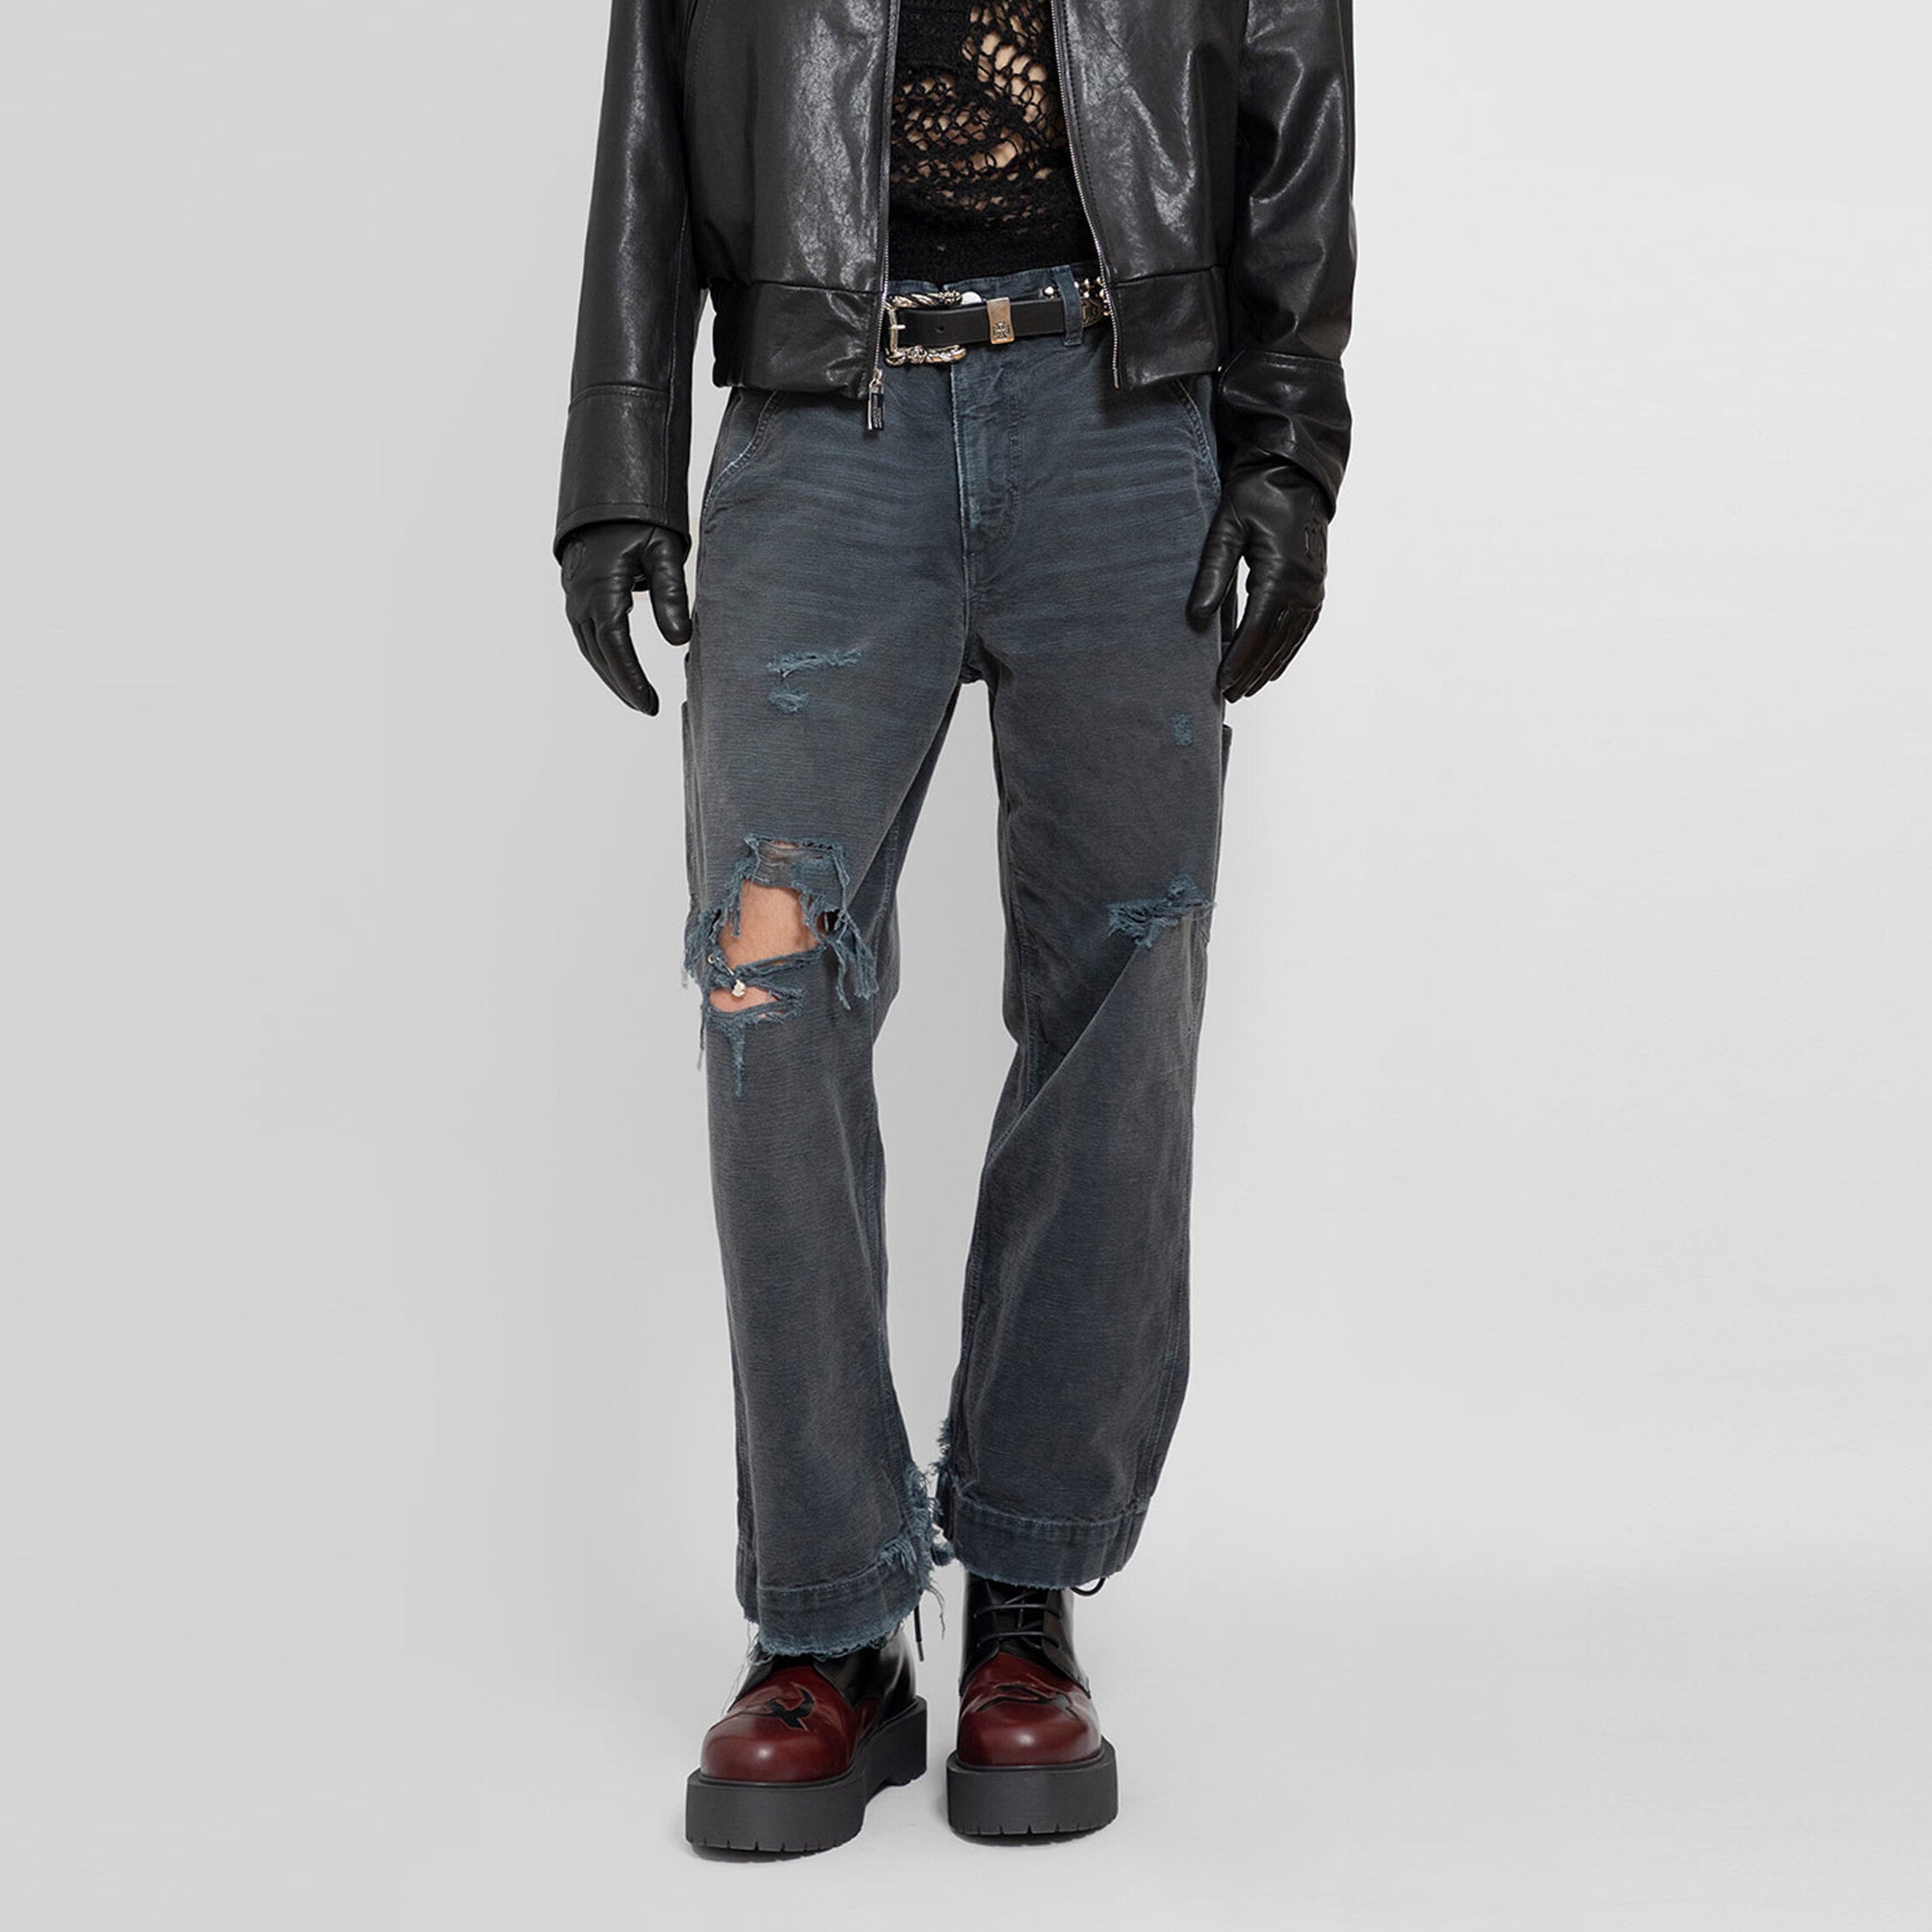 yuunaichikawa ブラックジーンズ black jeans